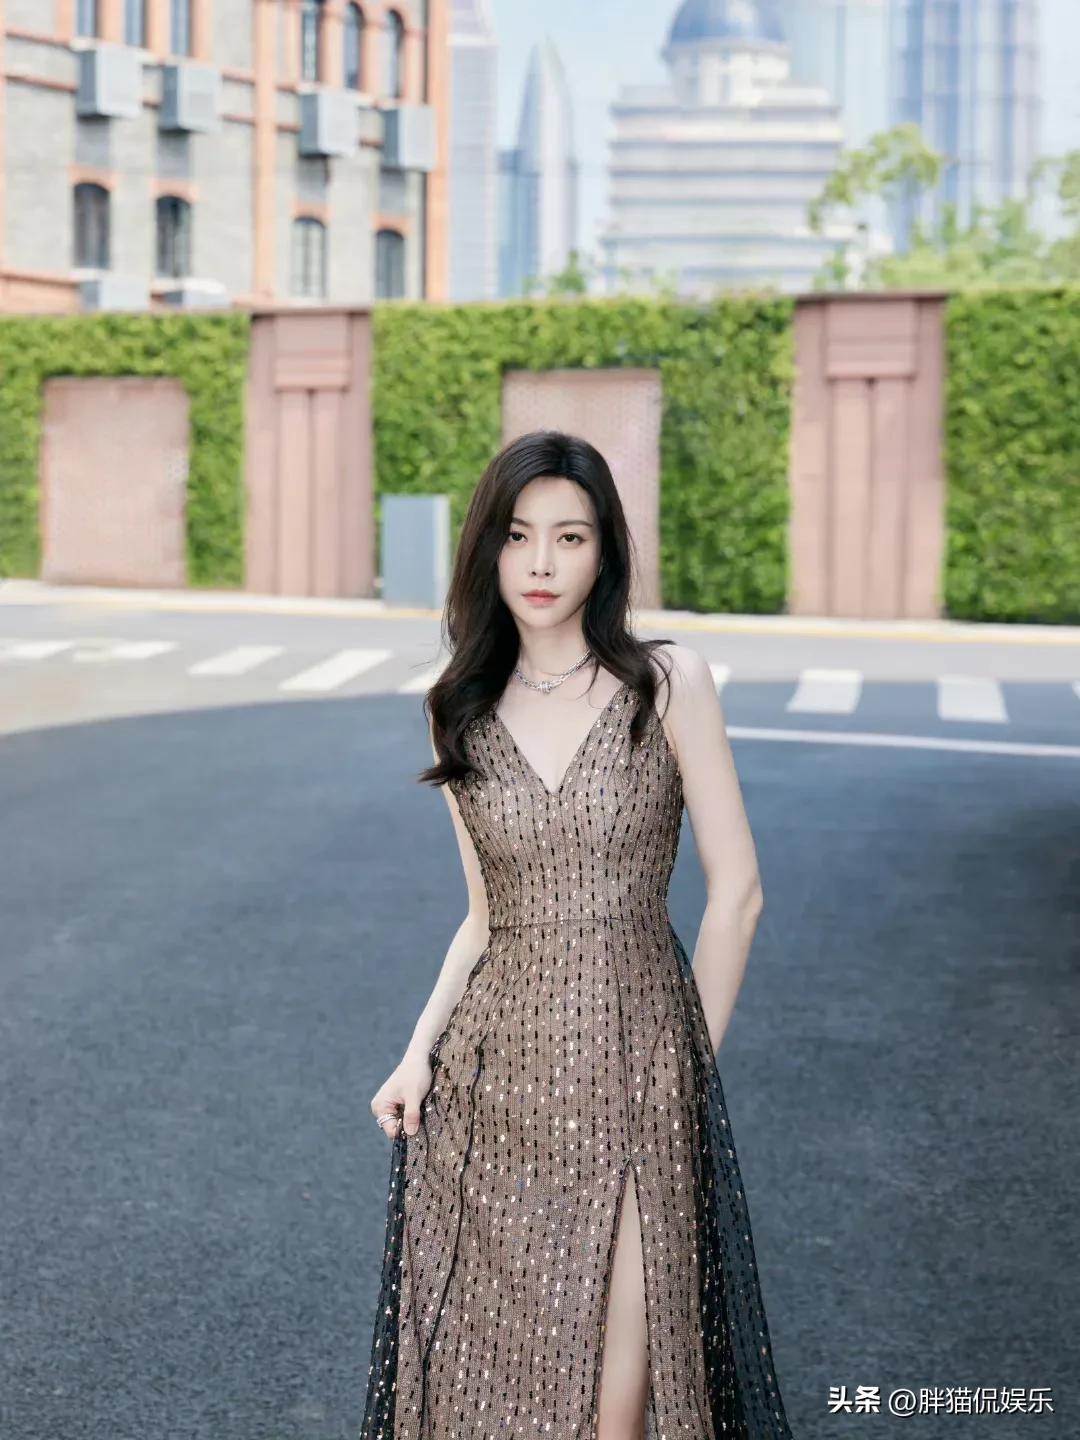 Yu Wenwen's glamorous beauty in a long black dress and long black hair ...